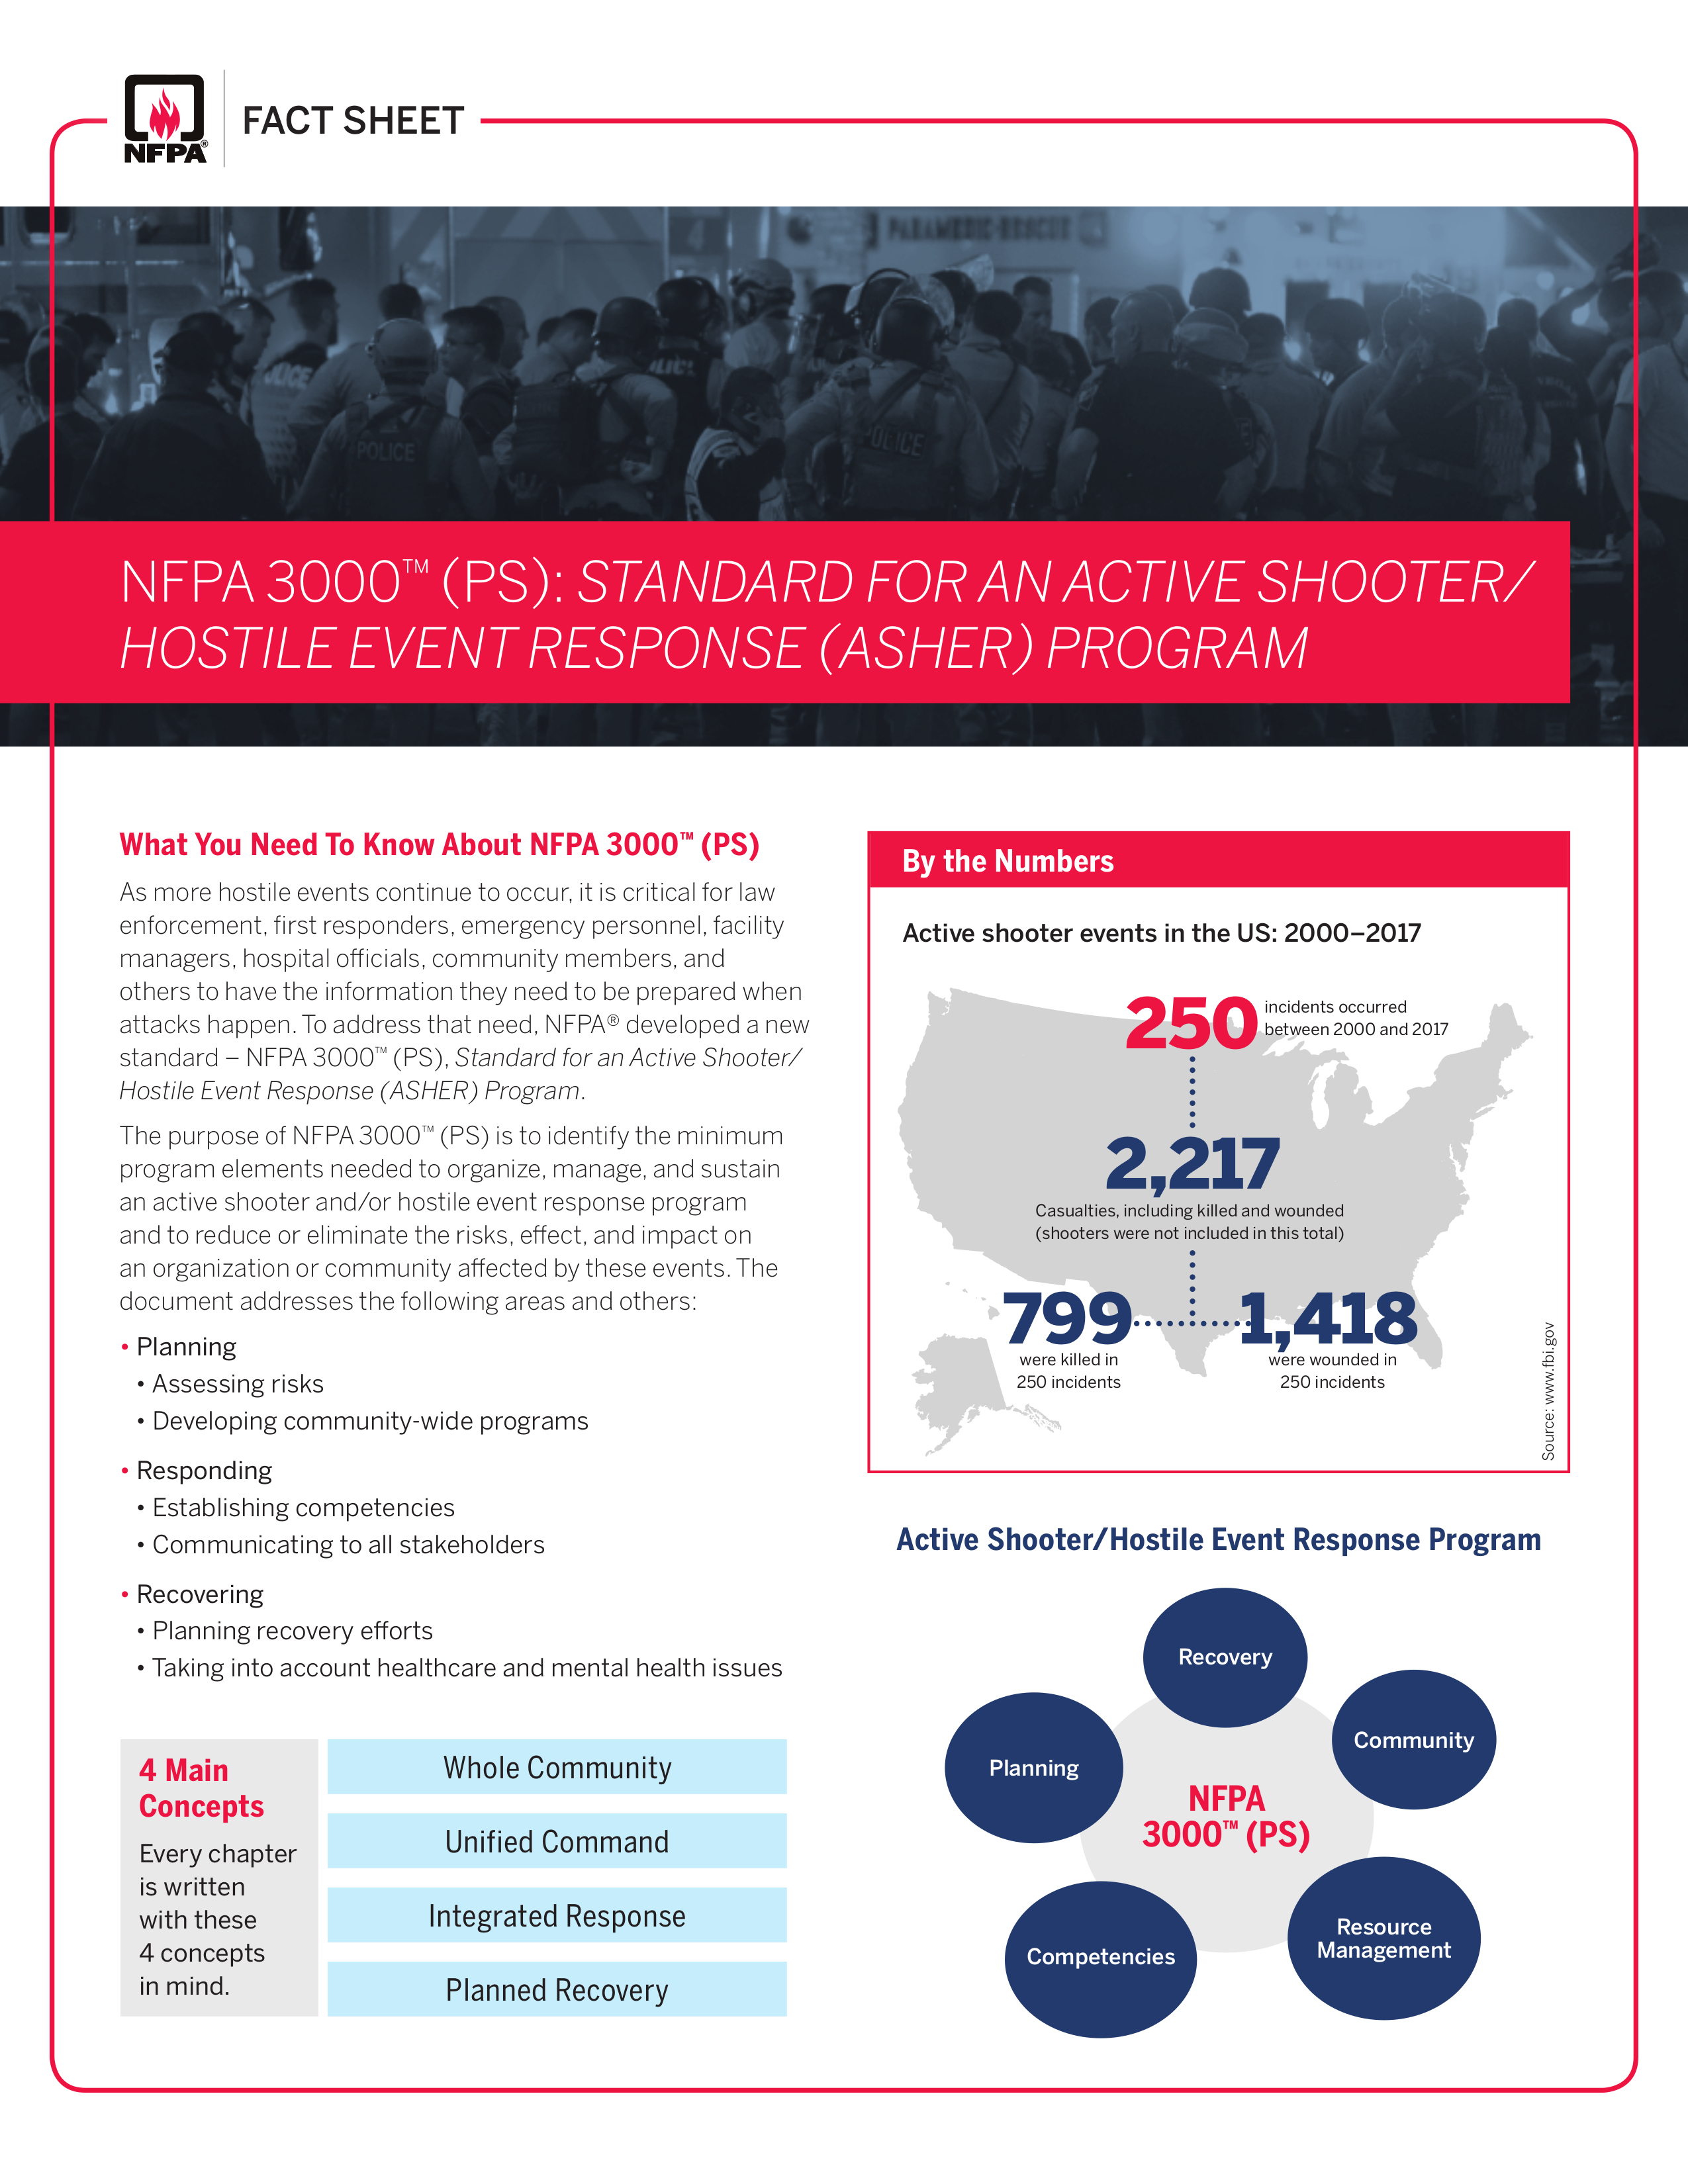 NFPA3000 Fact Sheet